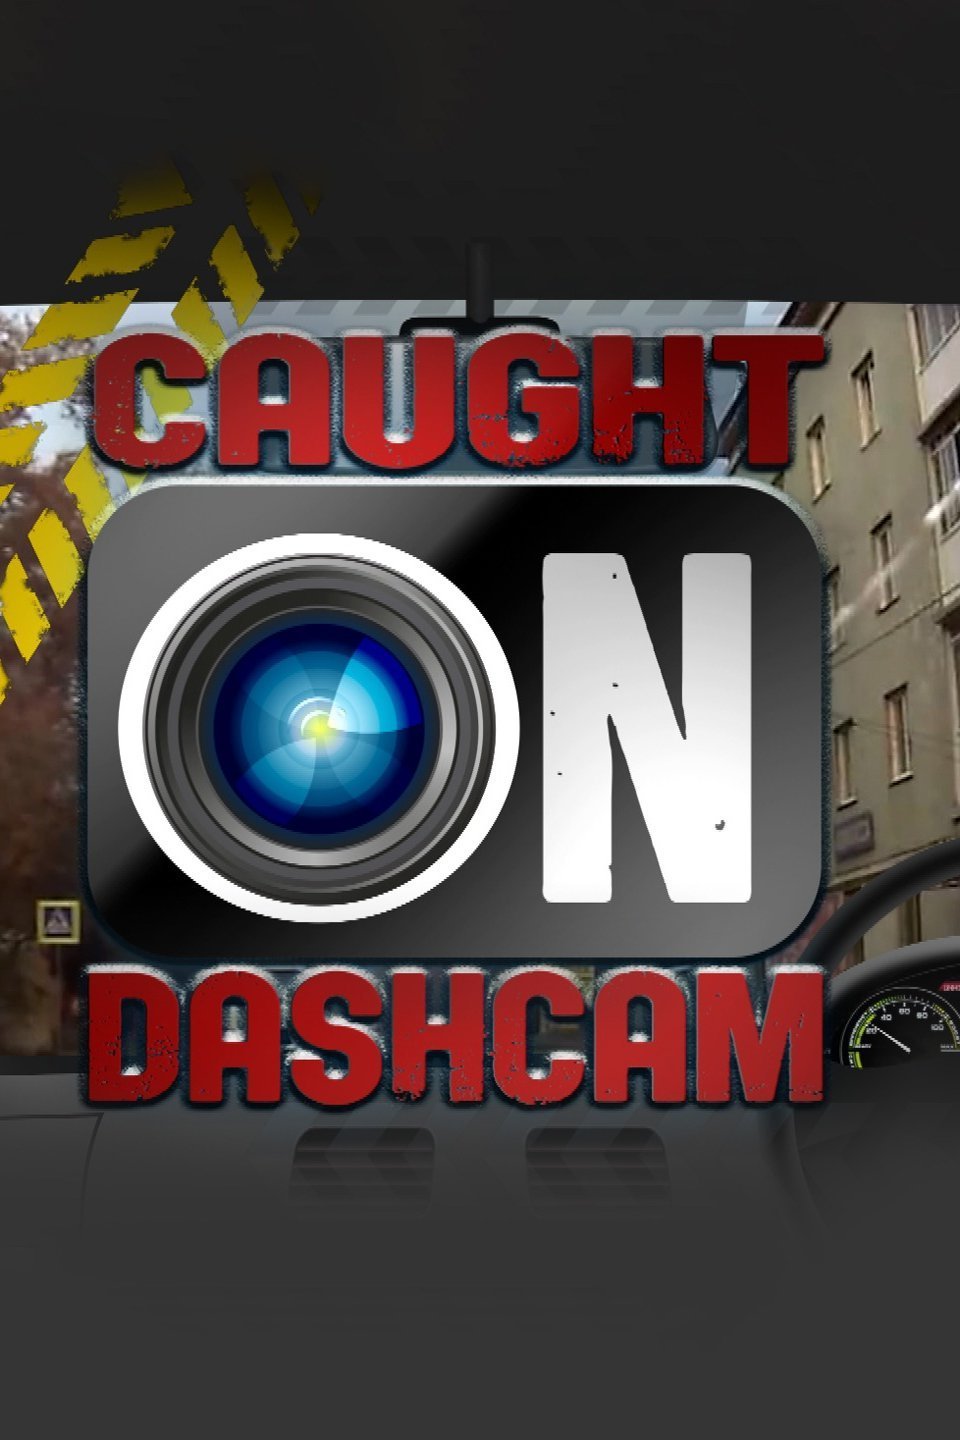 Caught on Dashcam, Season 2 Episode 4